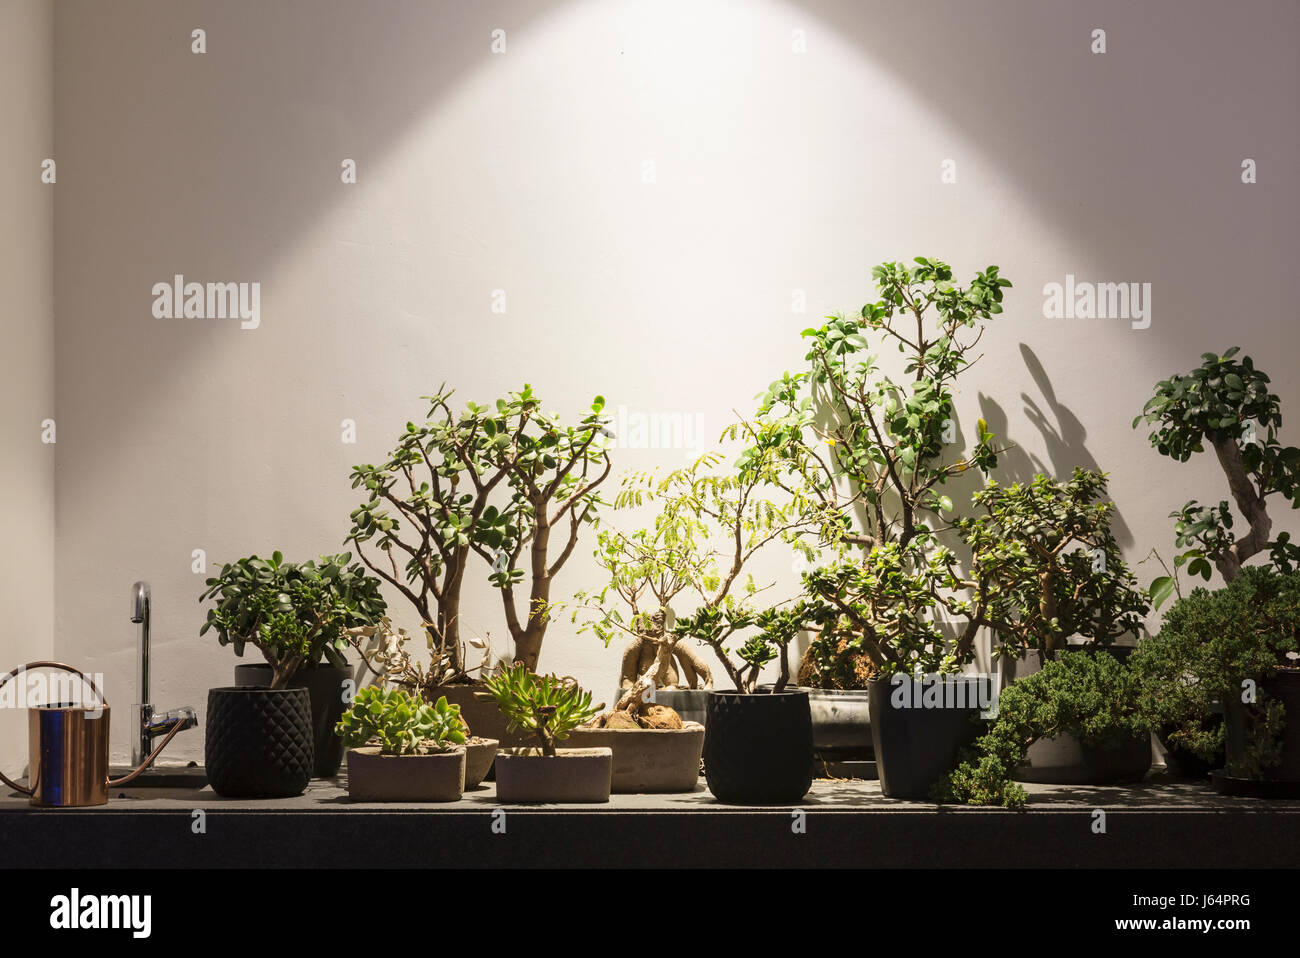 Tropical plants and bonsai trees under illumination of light Stock Photo